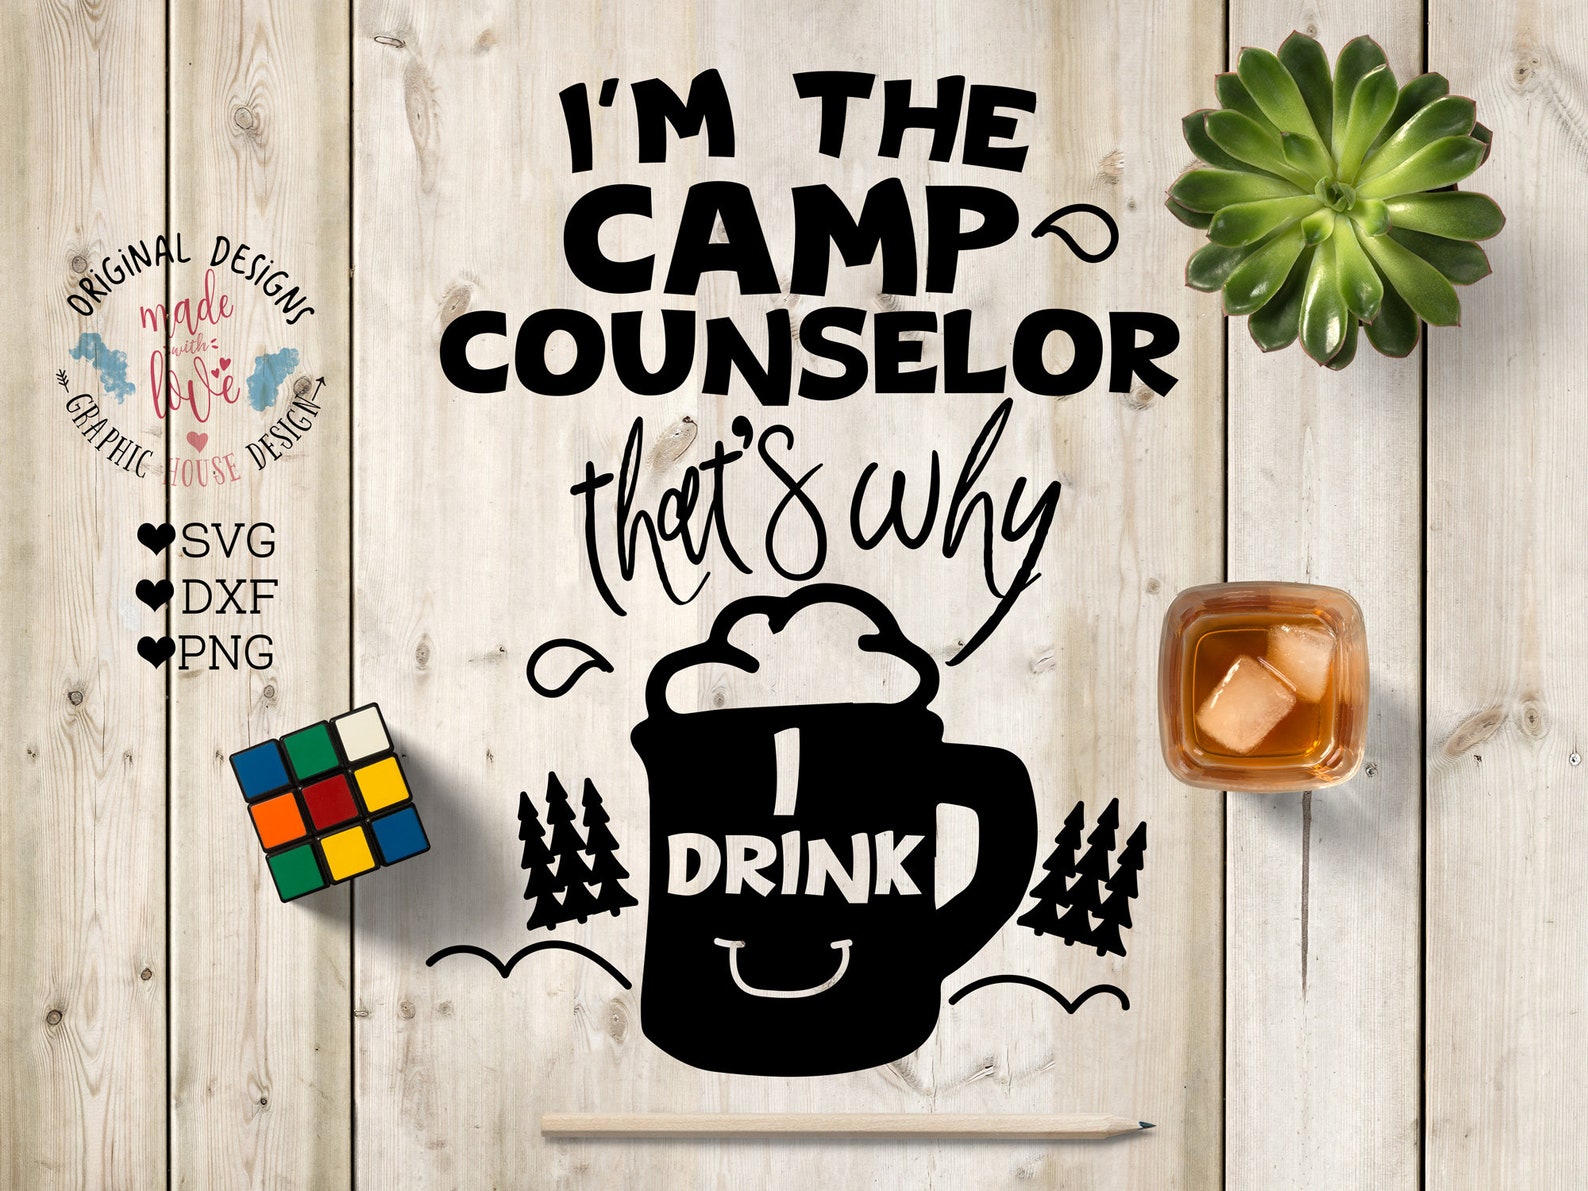 Camp counselor